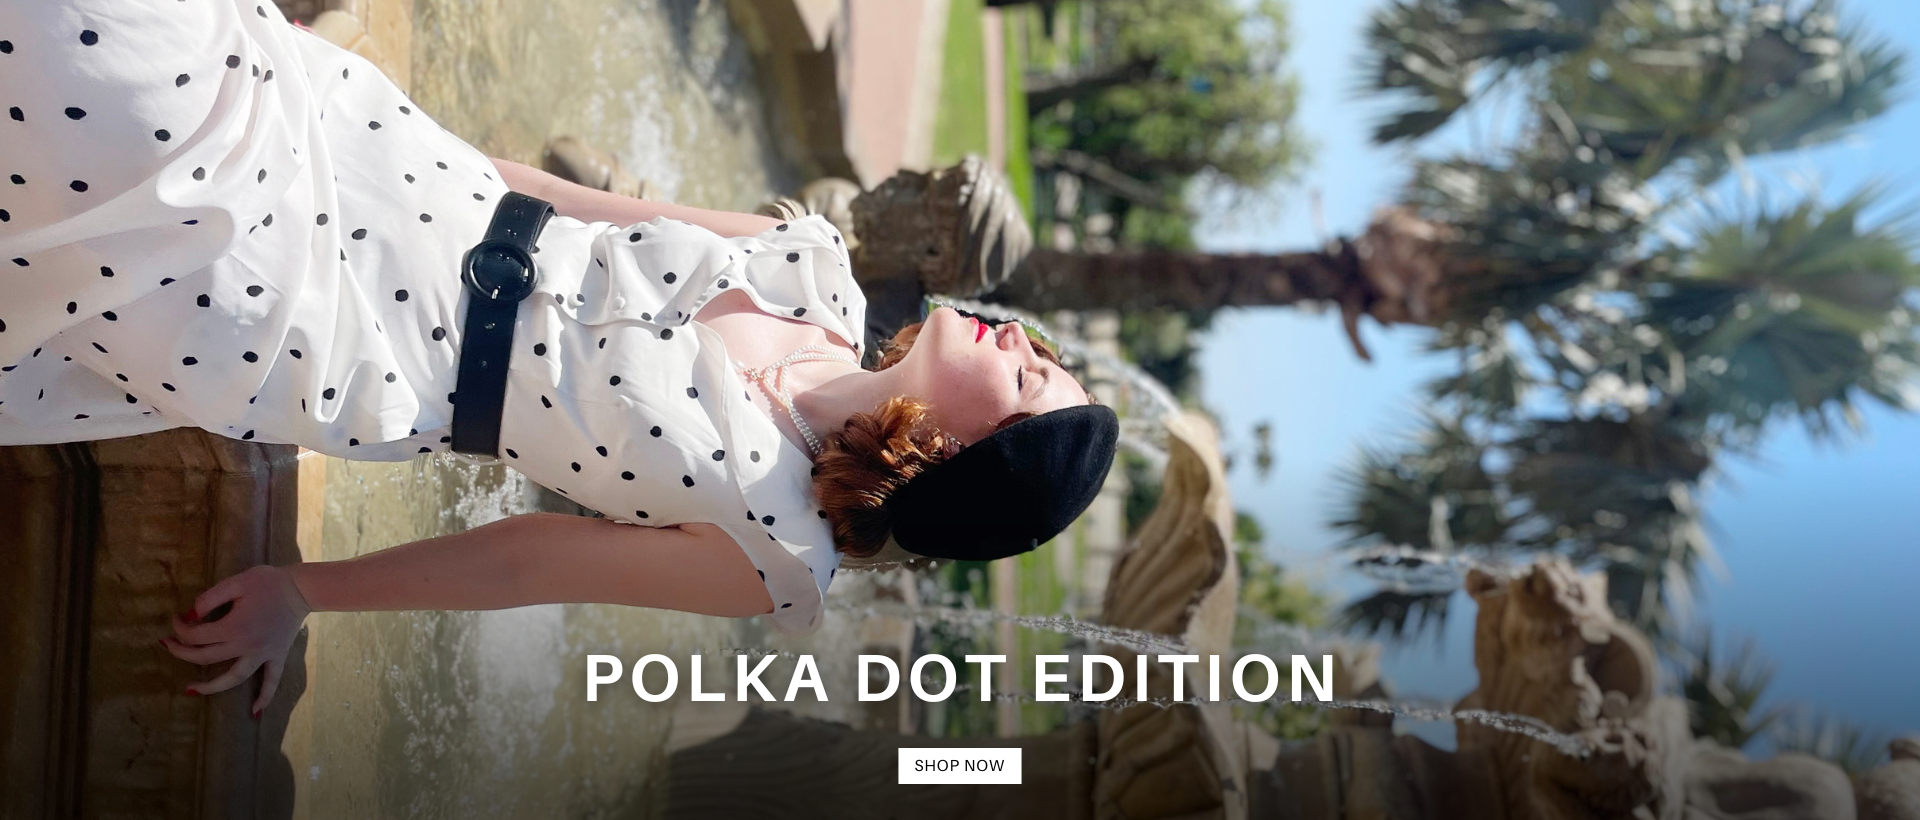 Voodoo vixen Polka Dot Edition